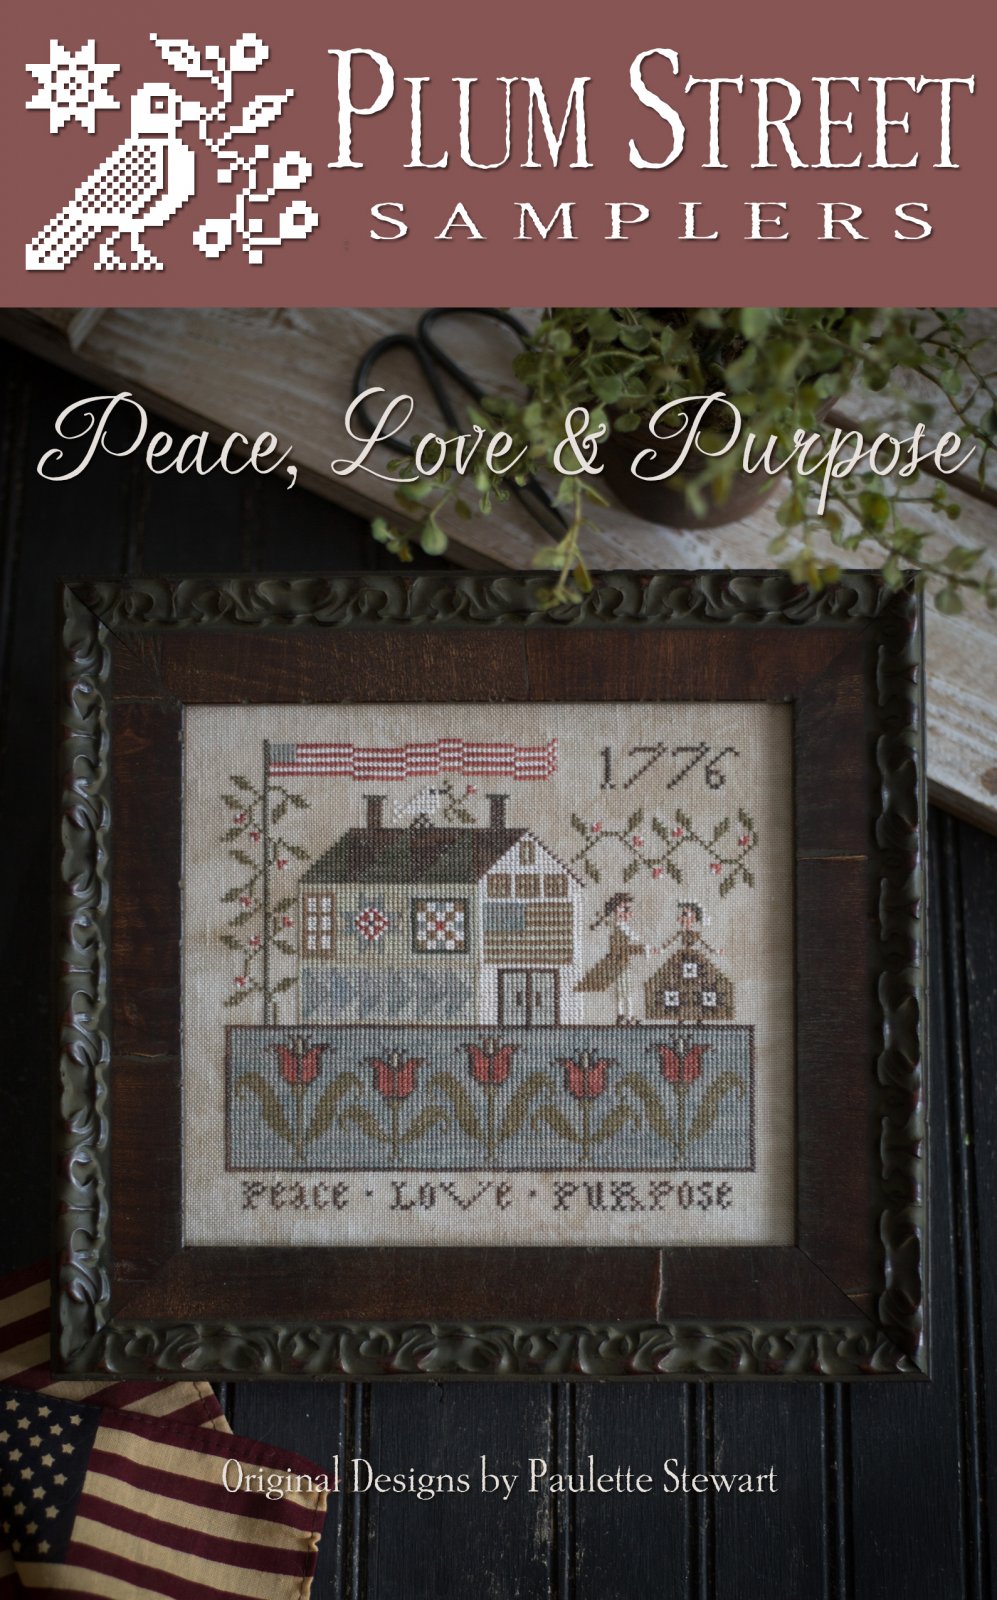 Plum Street Samplers - Peace, Love and Purpose